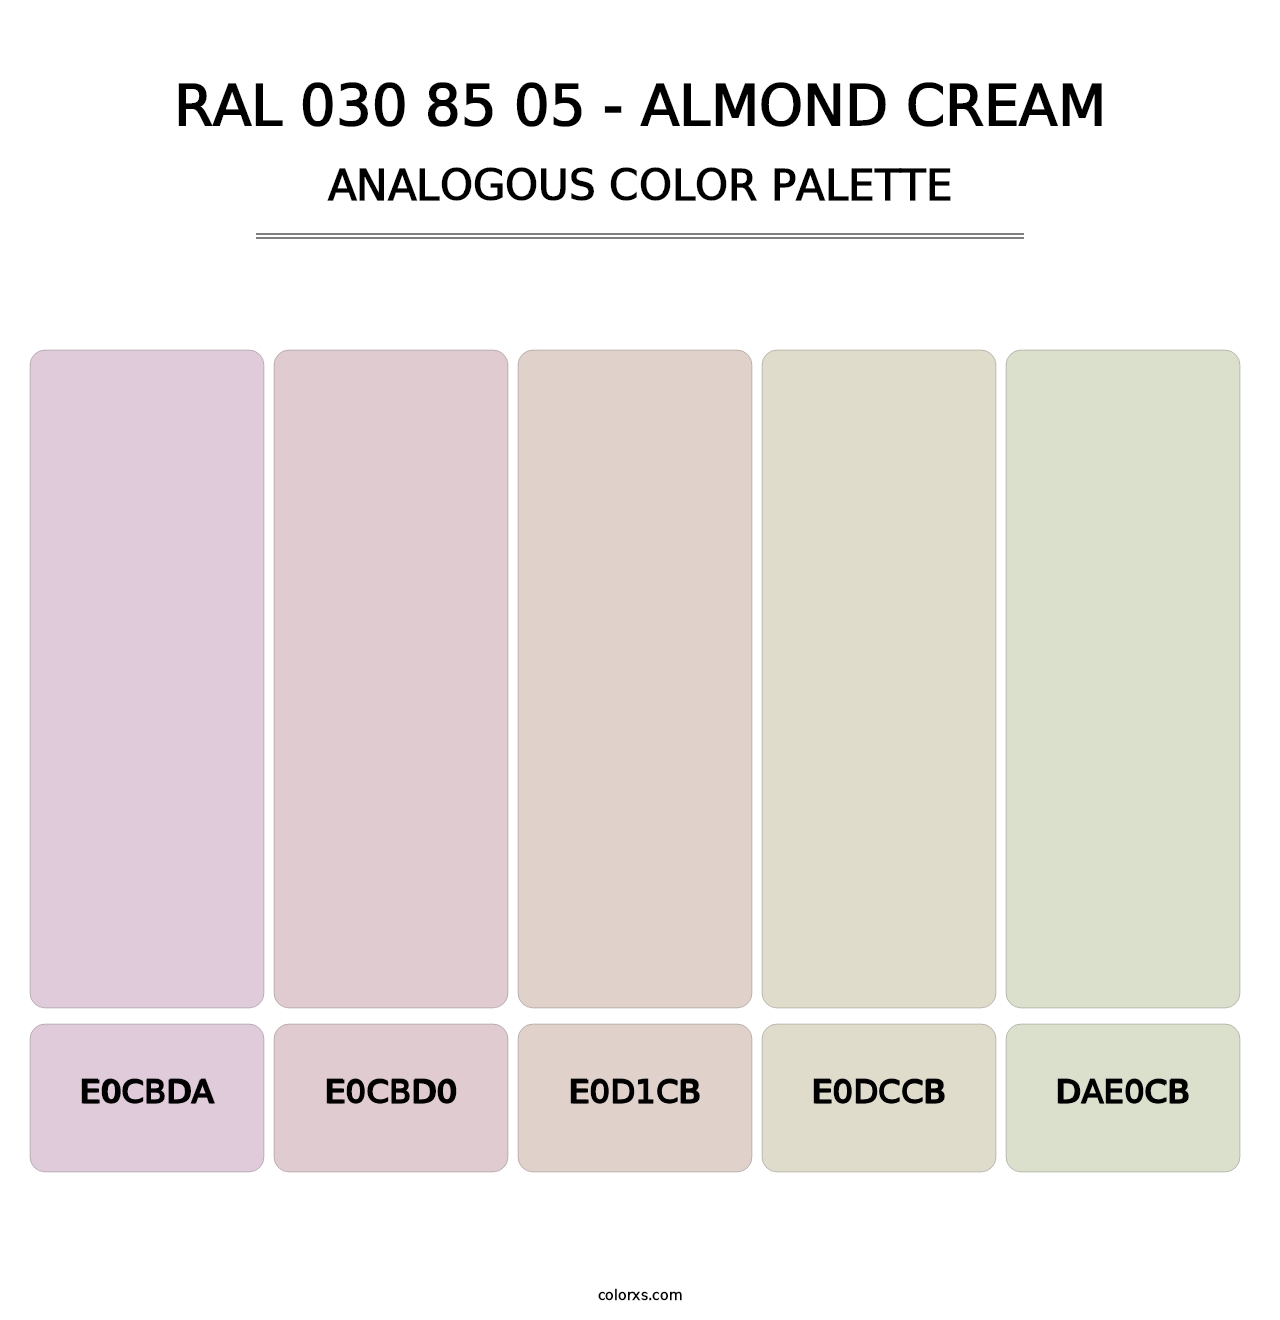 RAL 030 85 05 - Almond Cream - Analogous Color Palette